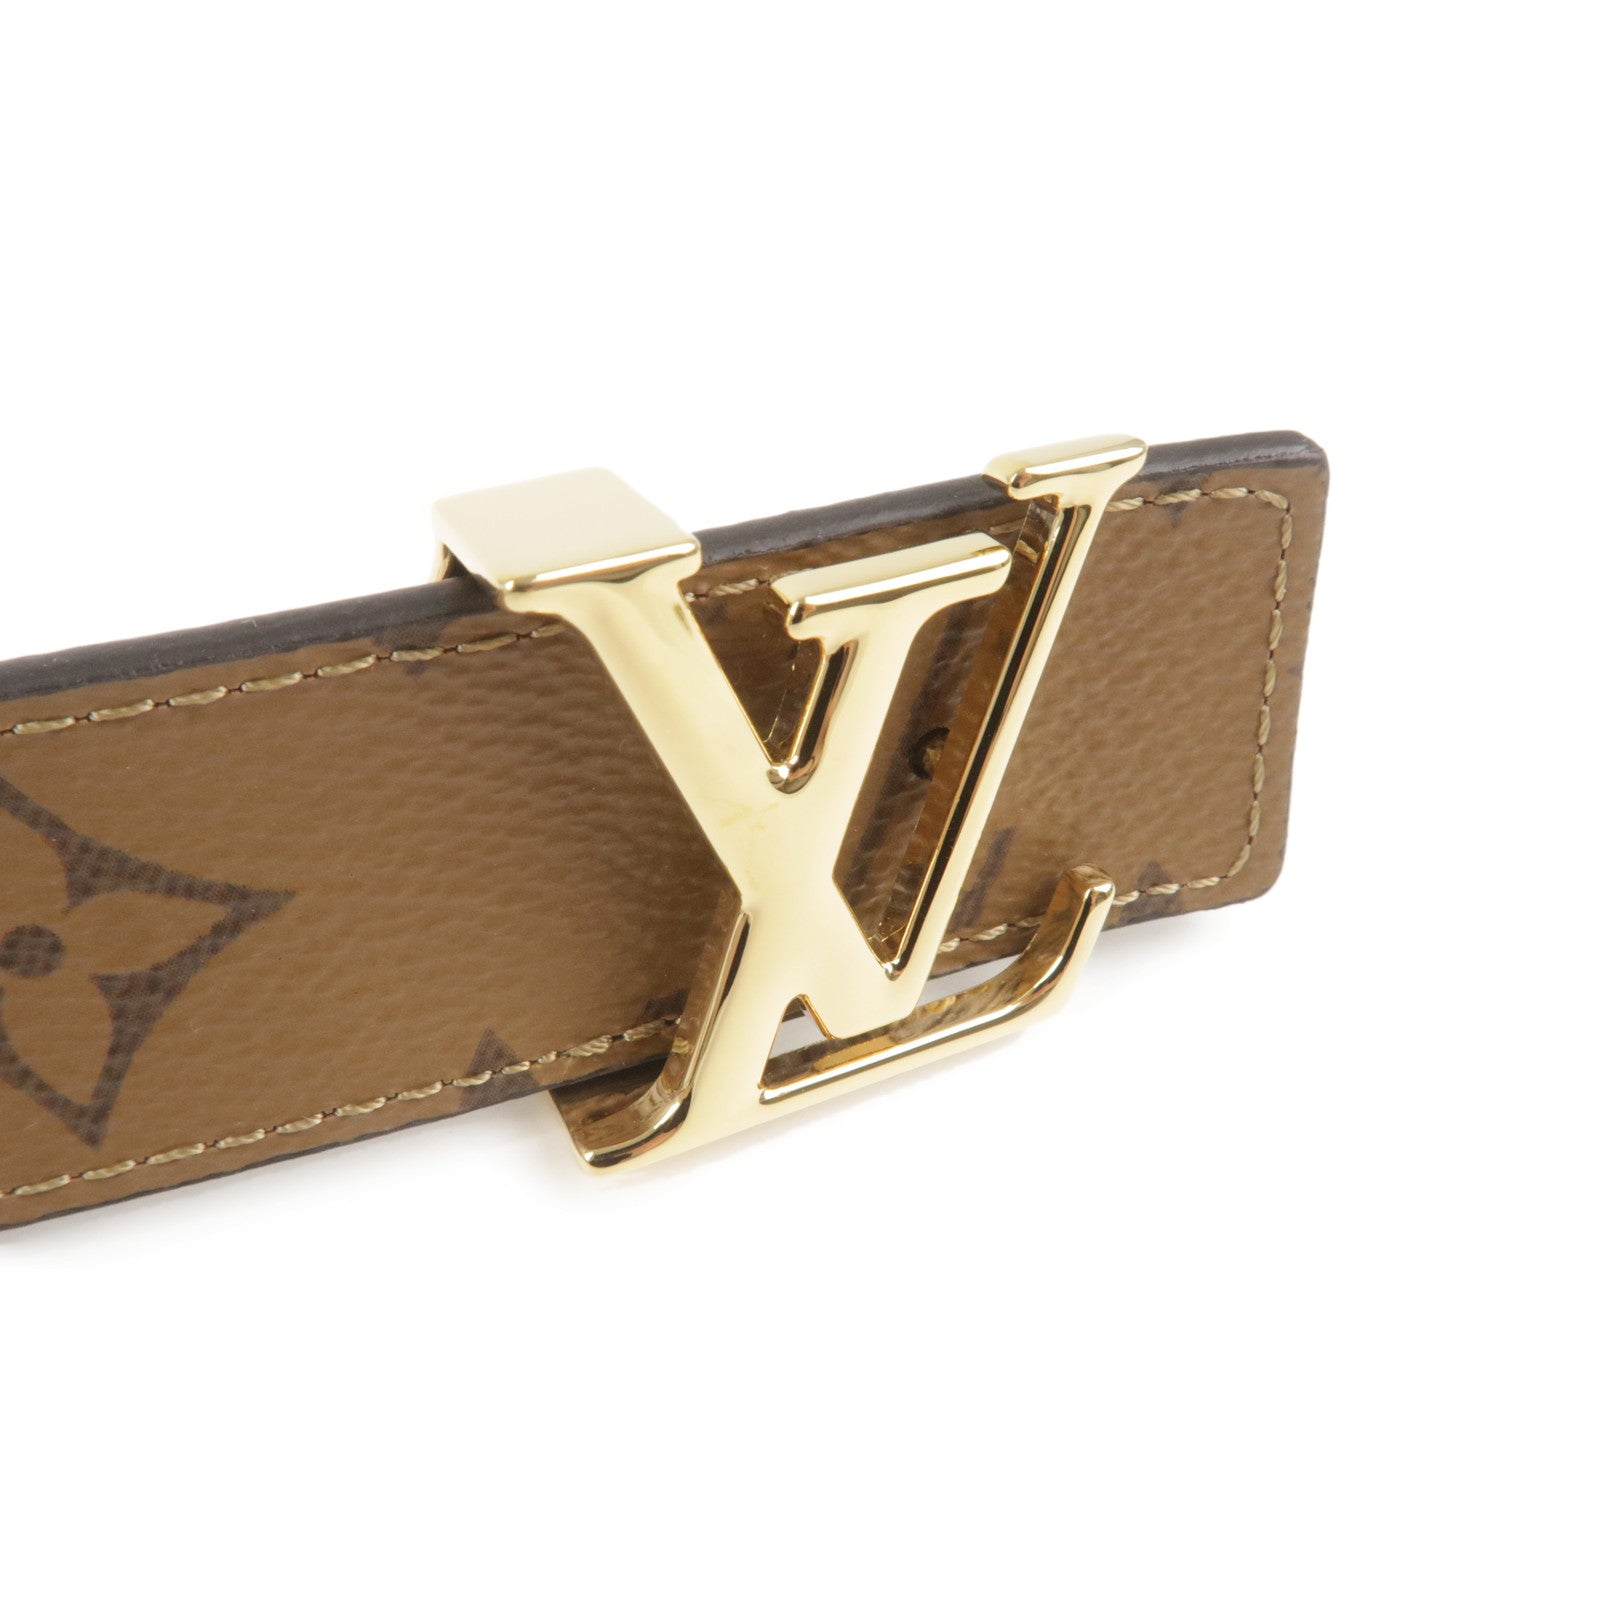 Louis Vuitton Reversible Belt LV Iconic Monogram Giant Reverse 30